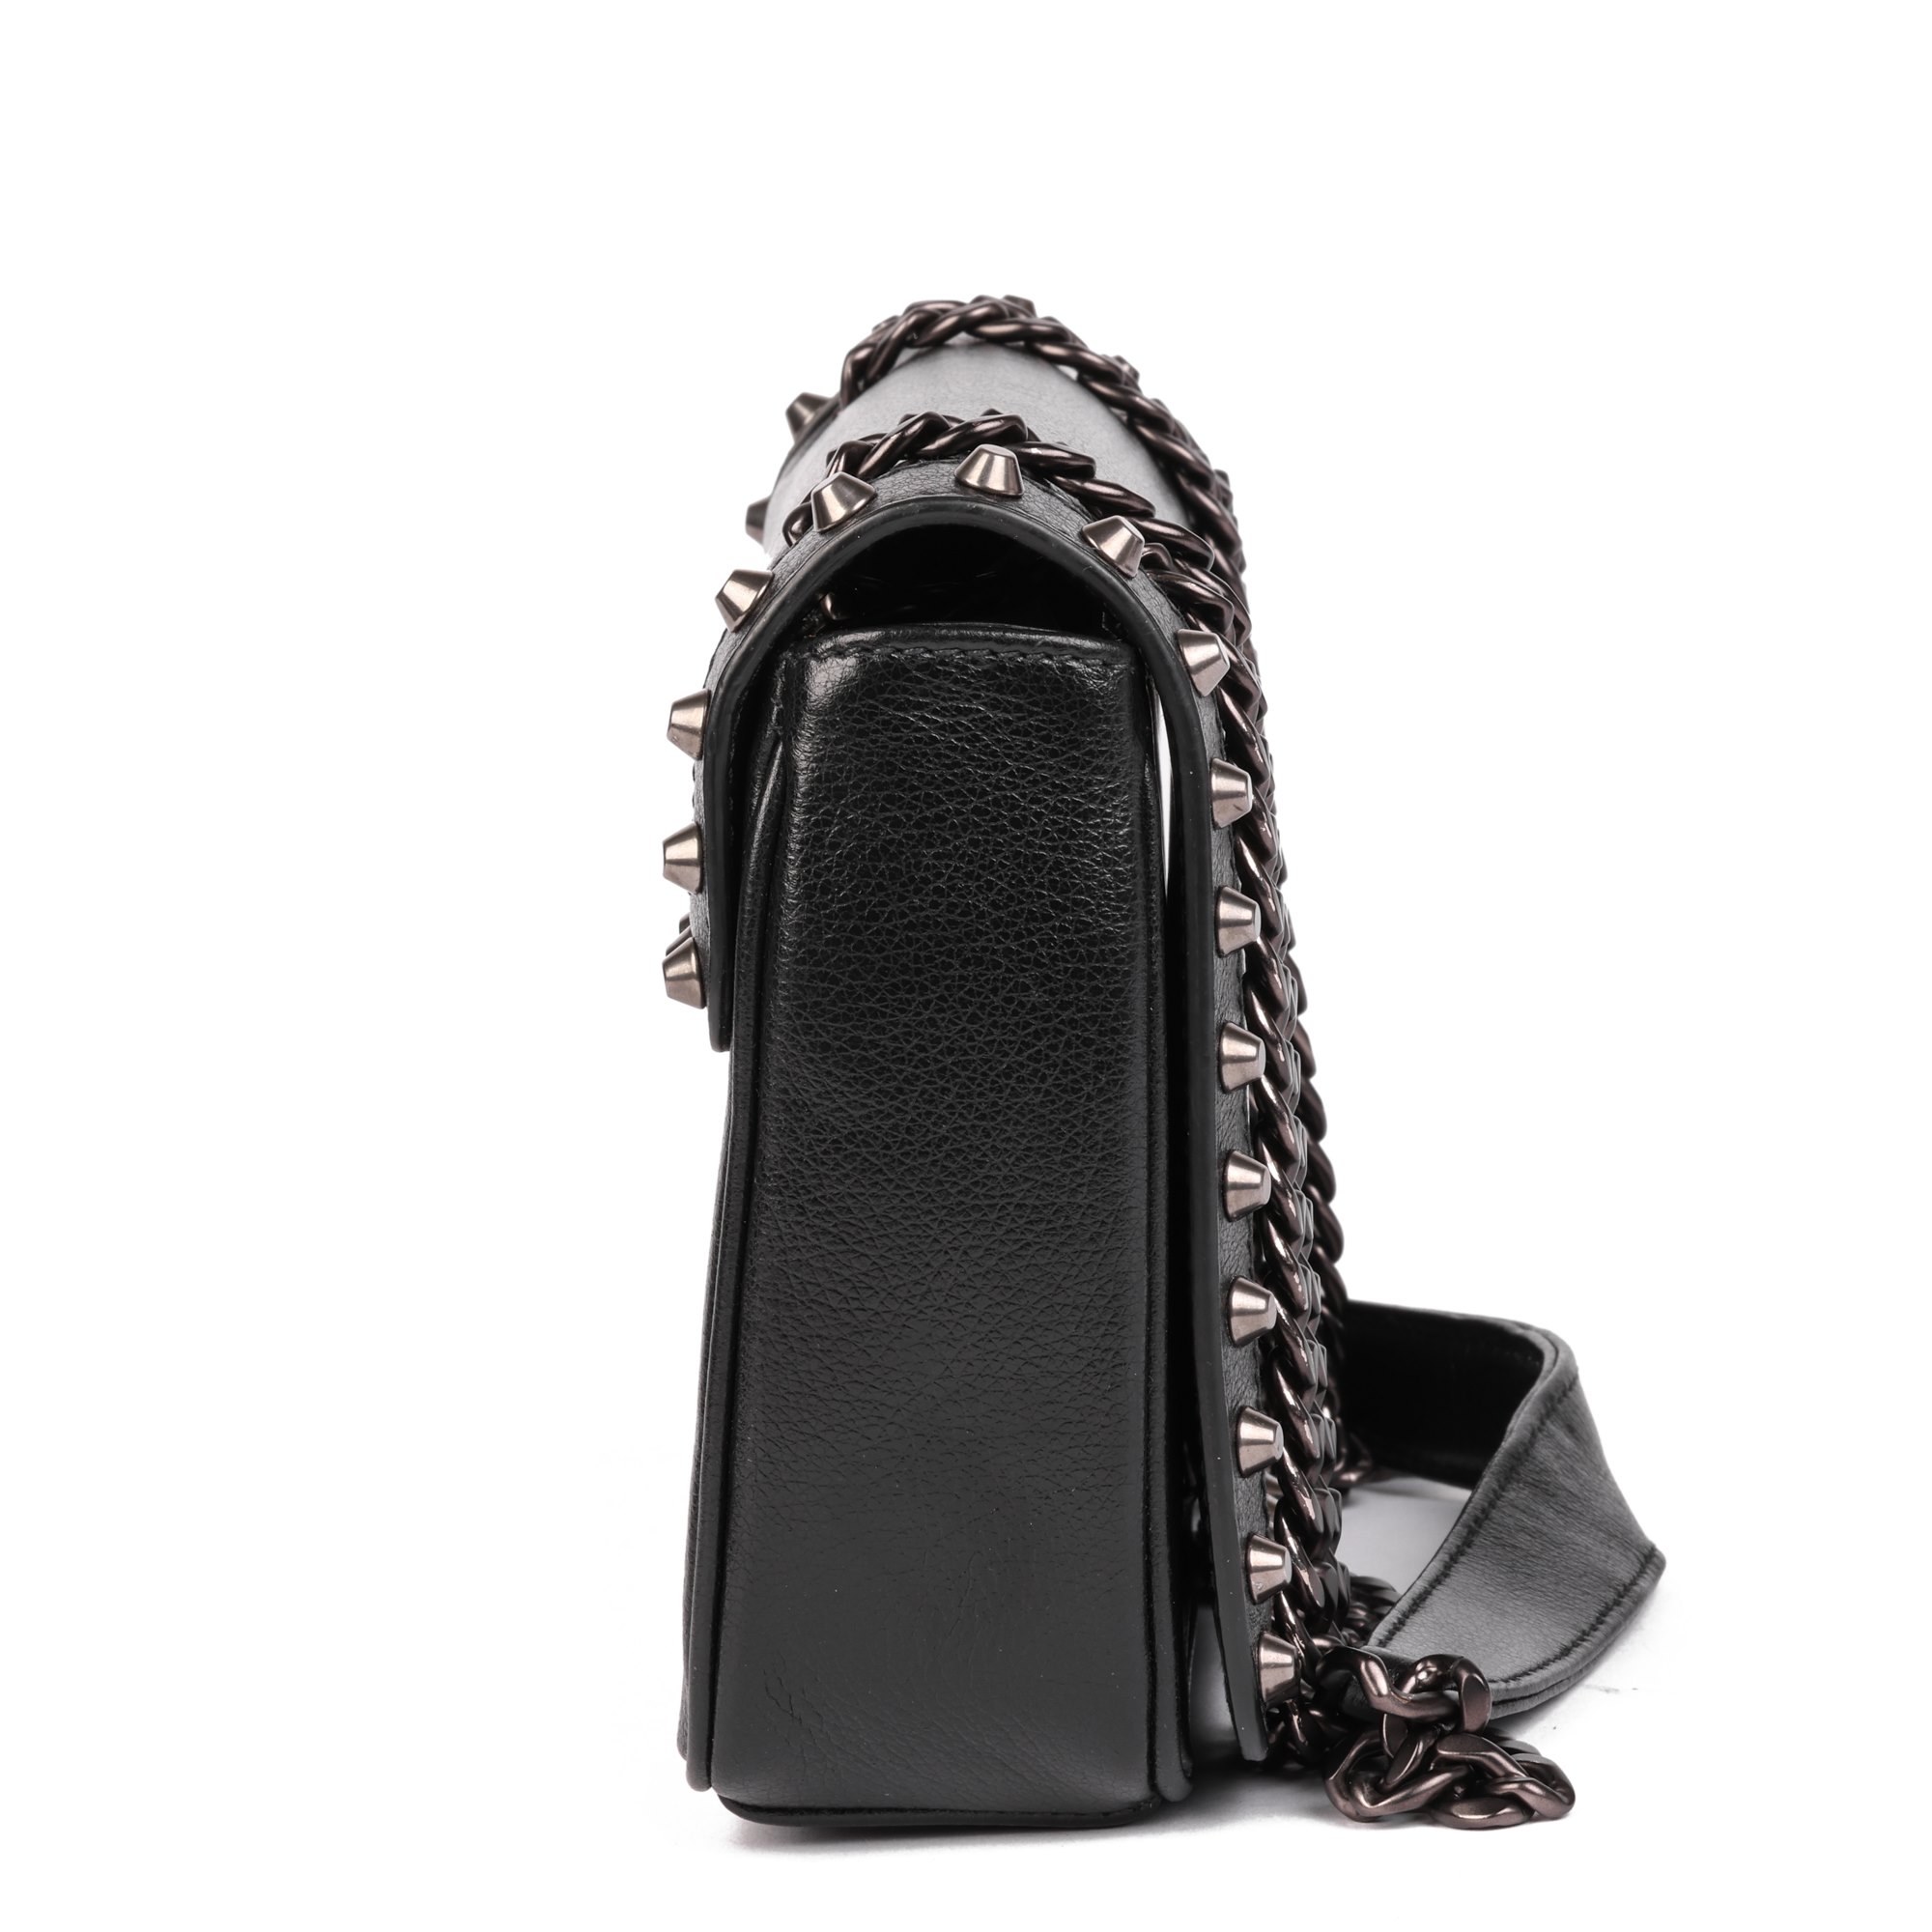 Prada Black Calfskin Leather Studded Crossbody Bag